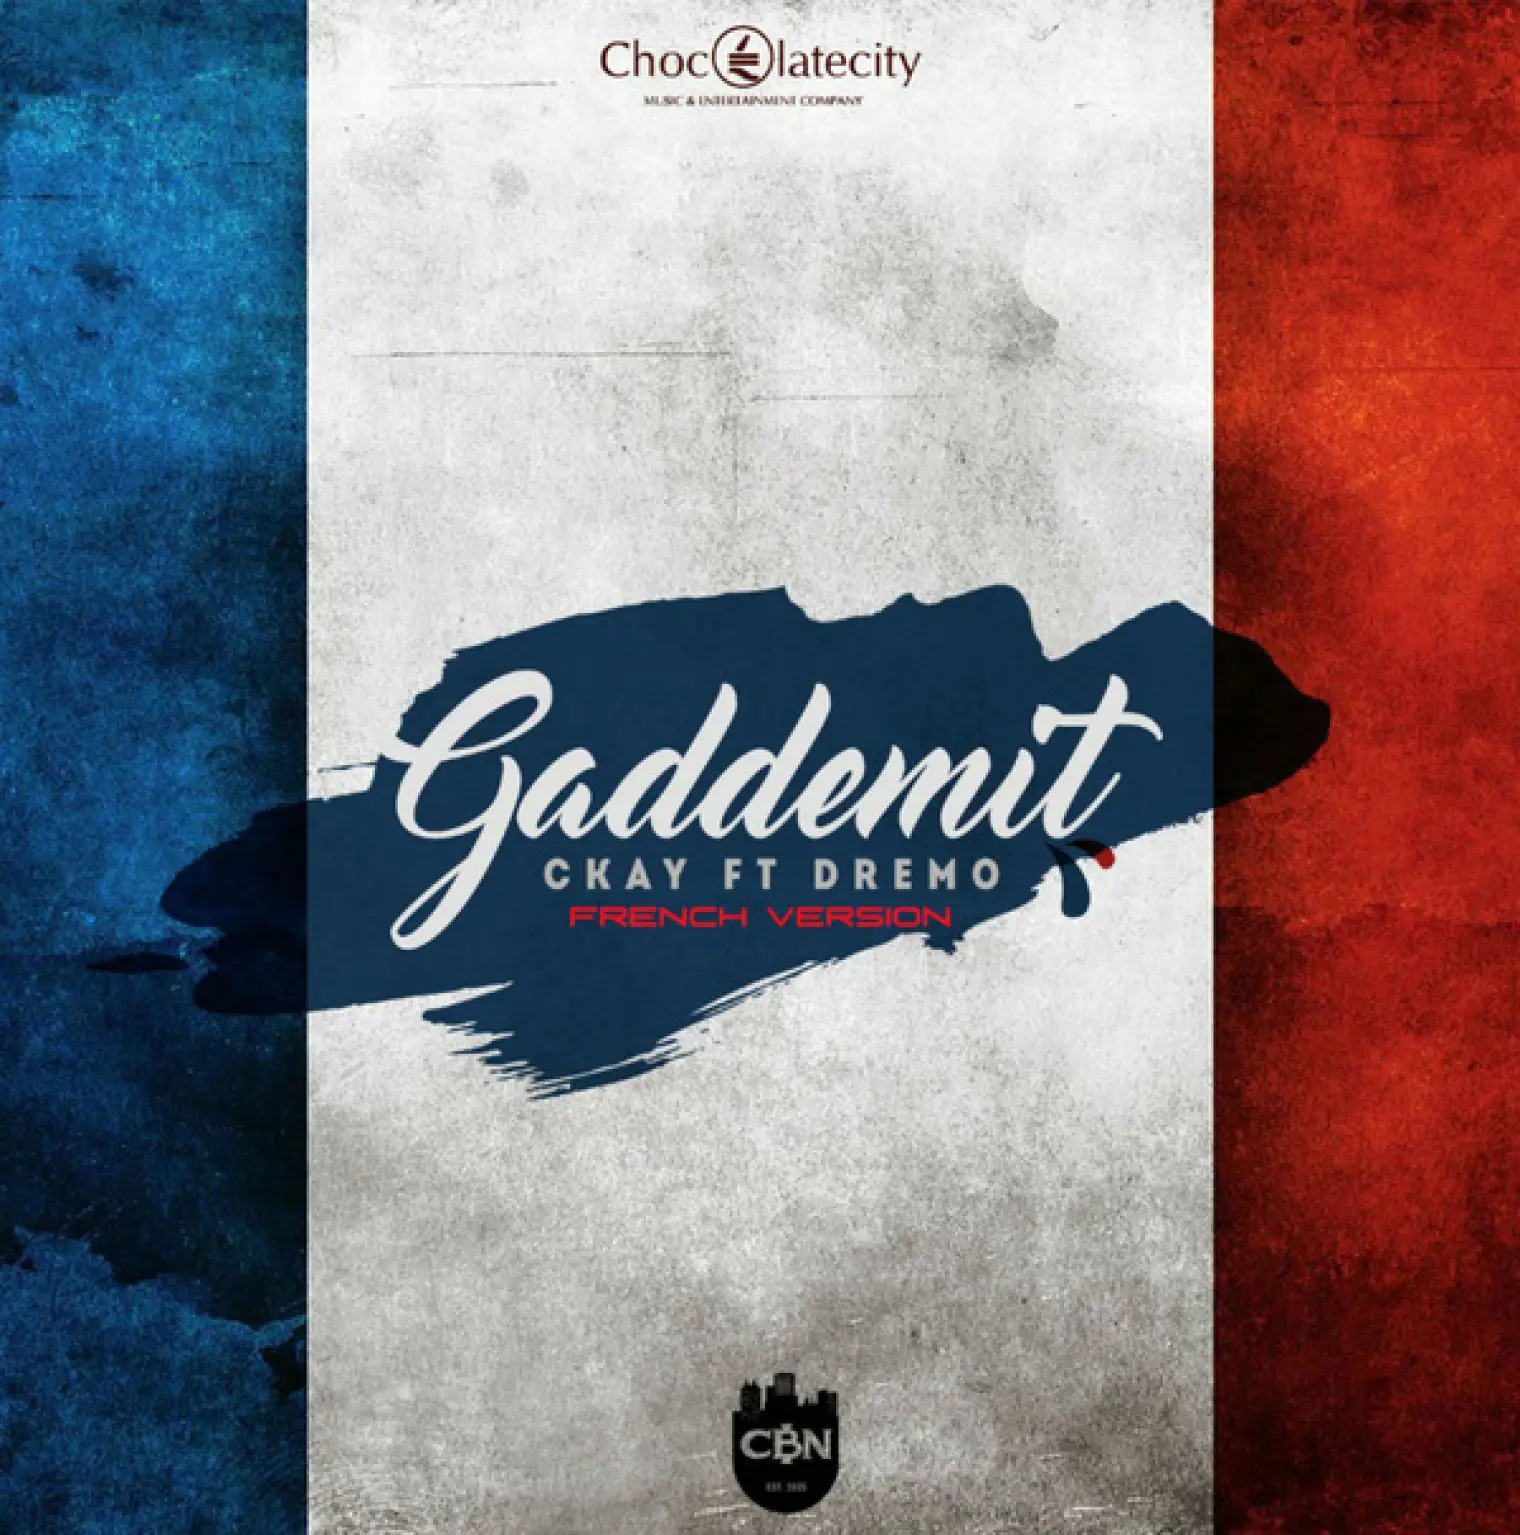 Gaddemit French Version -  CKay 